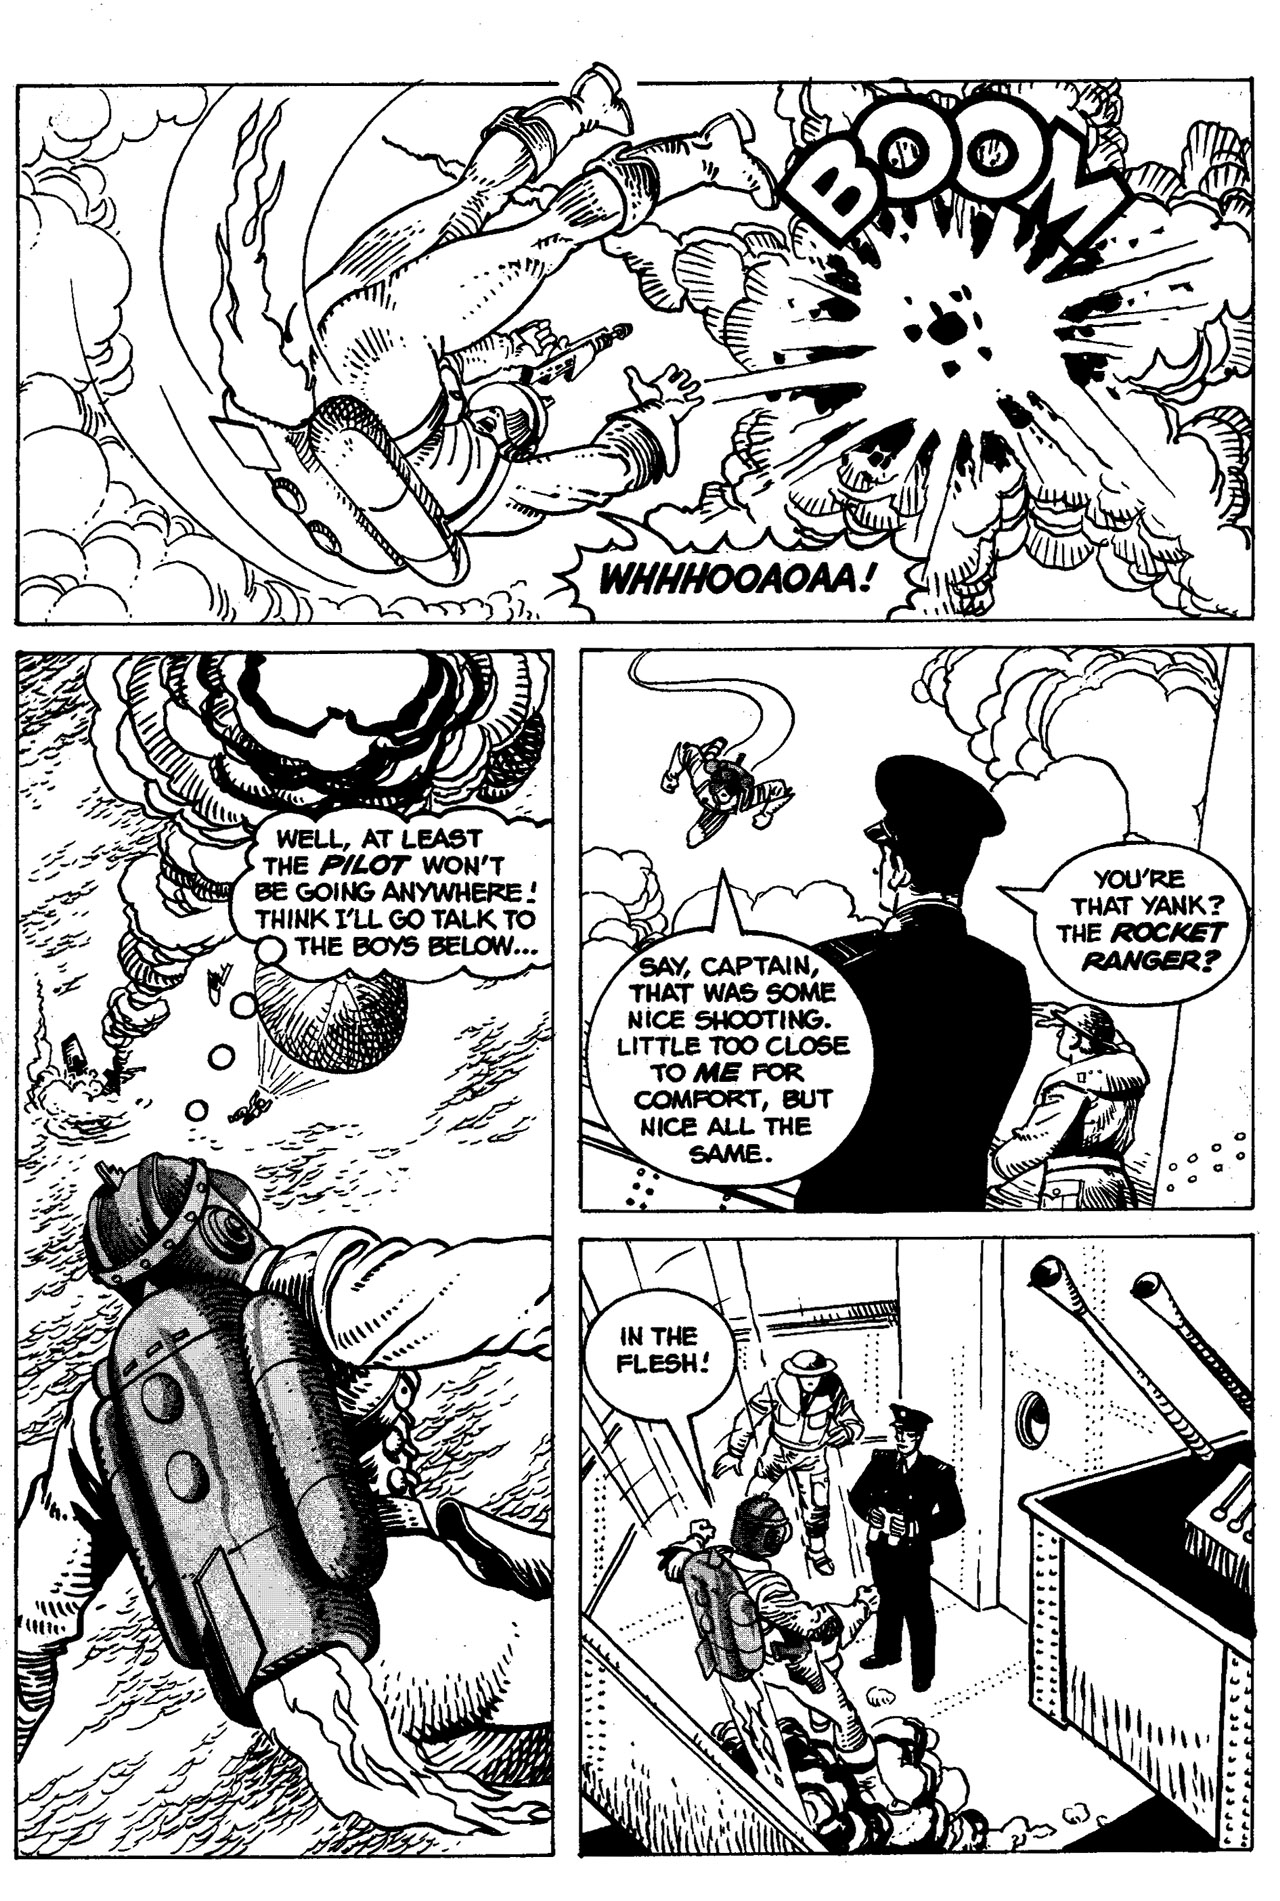 Read online Rocket Ranger comic -  Issue #2 - 5